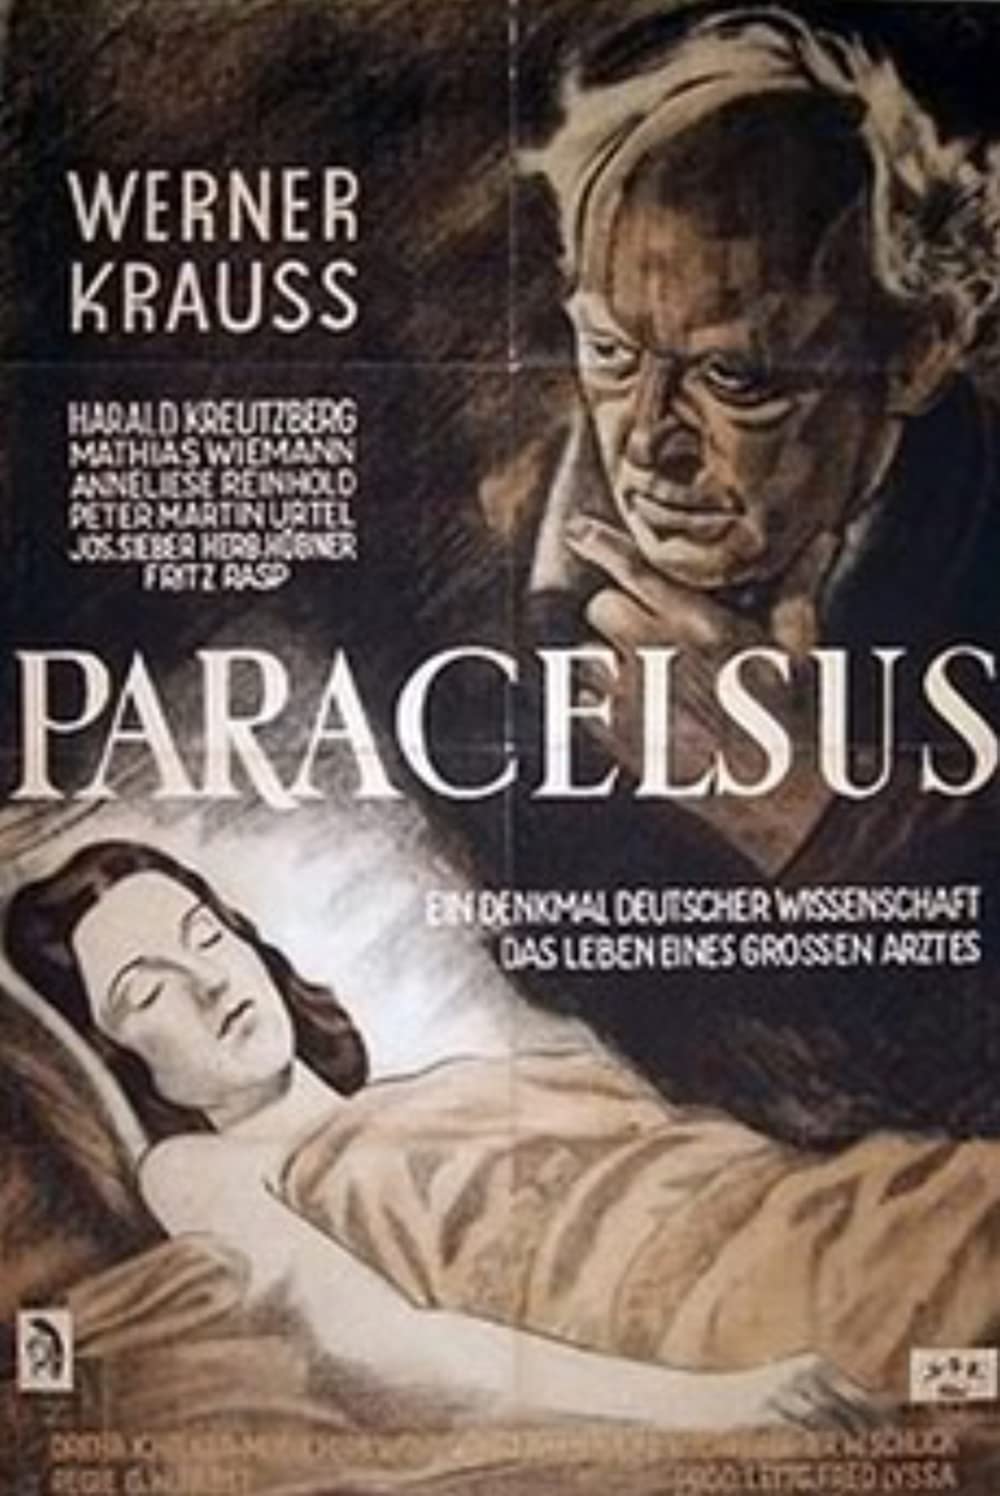 Filmbeschreibung zu Paracelsus